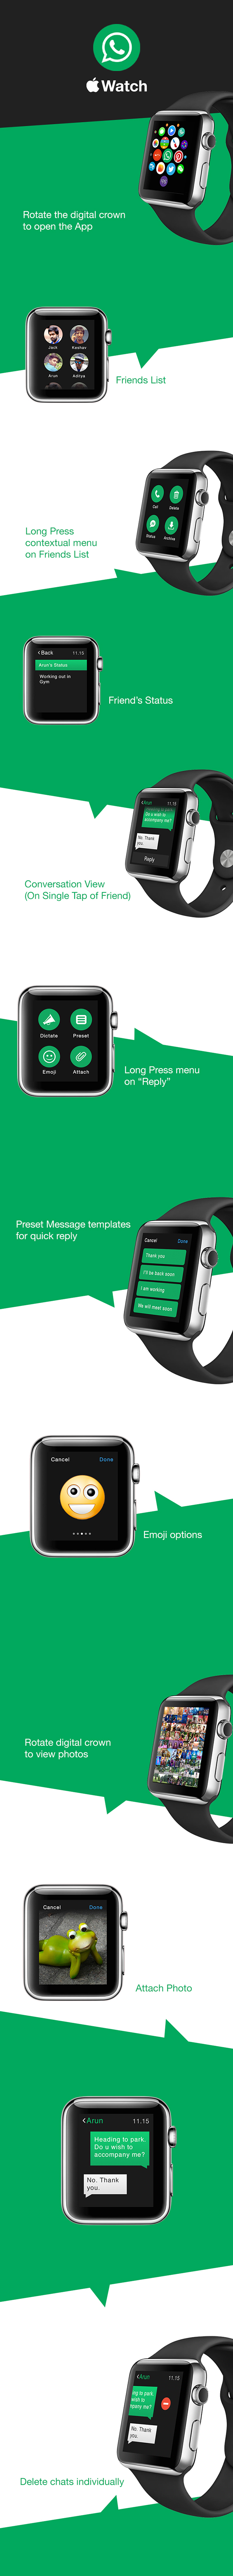 04-apple-watch-app-ui-ux-user-experience-interfface-design.jpg